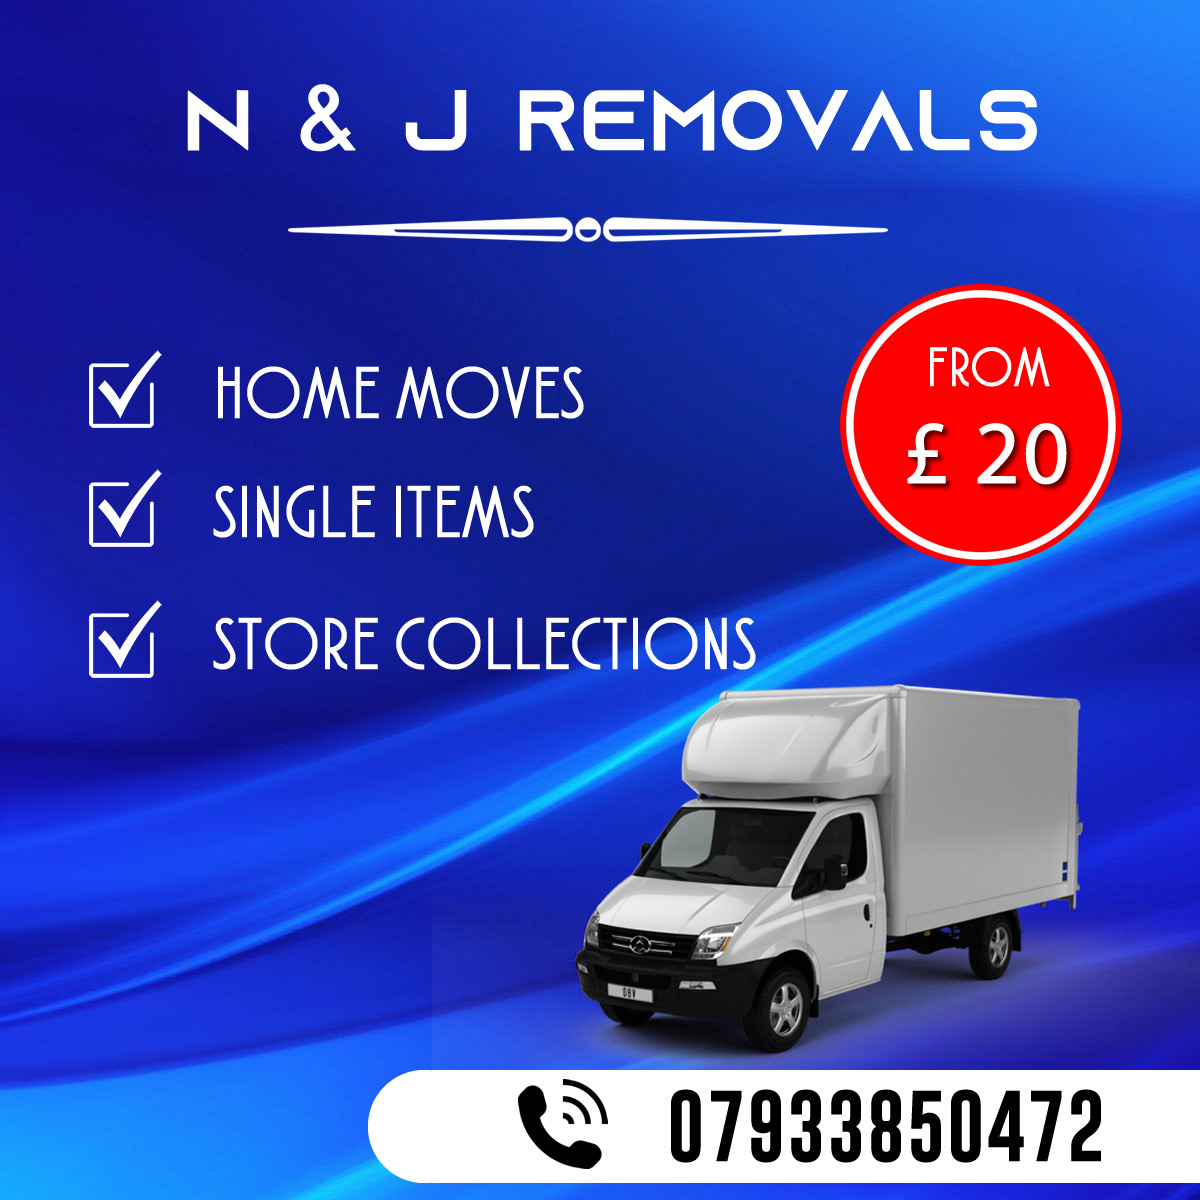 N.J Removal Limited logo